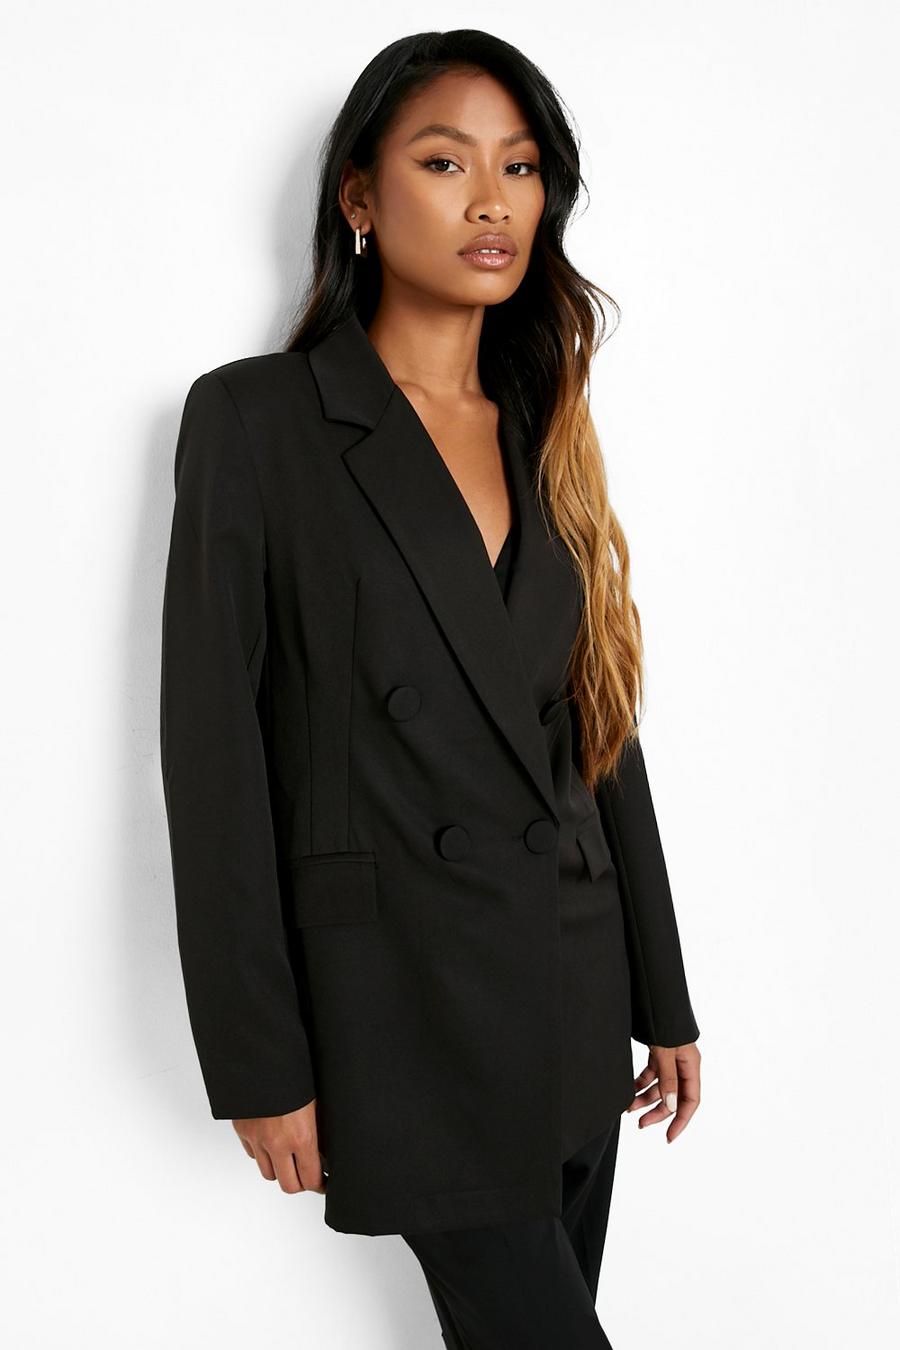 https://media.boohoo.com/i/boohoo/fzz26853_black_xl/female-black-tailored-contour-fitted-blazer/?w=900&qlt=default&fmt.jp2.qlt=70&fmt=auto&sm=fit